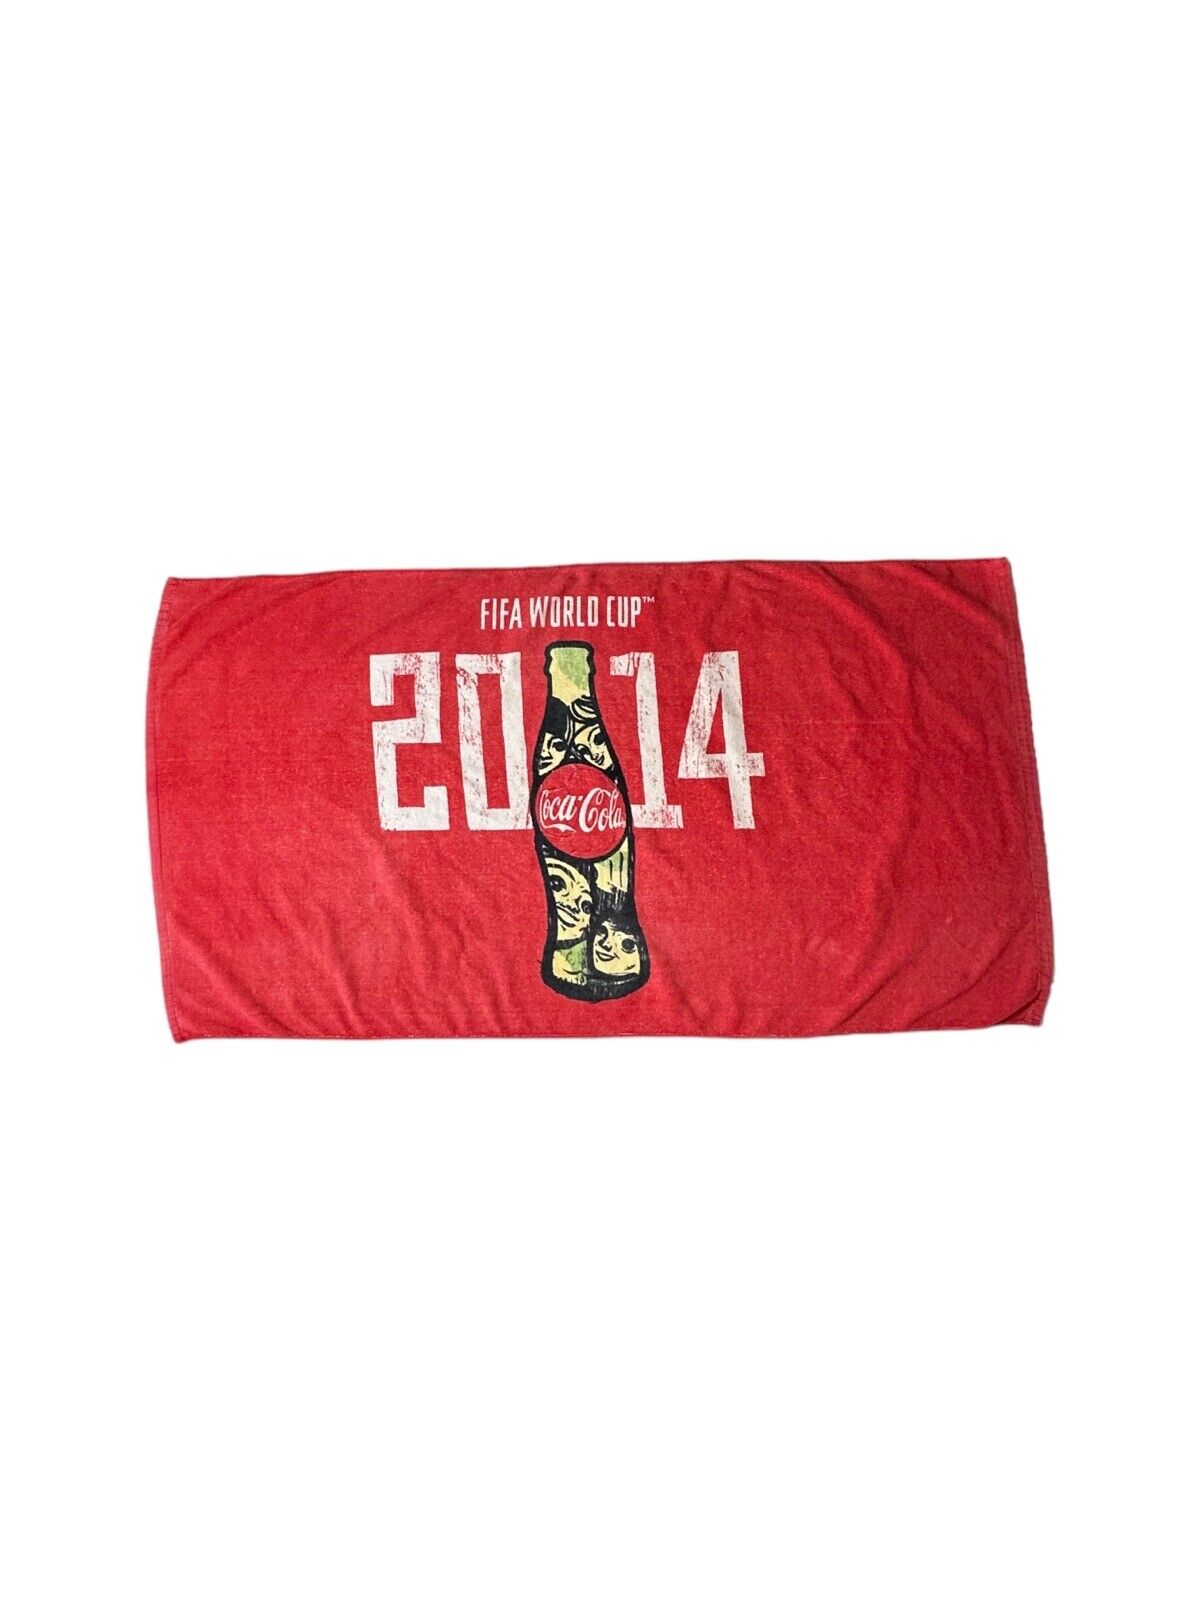 2014 FIFA World Cup 30x55 beach towel Coca-Cola Brazil rare soccer gem